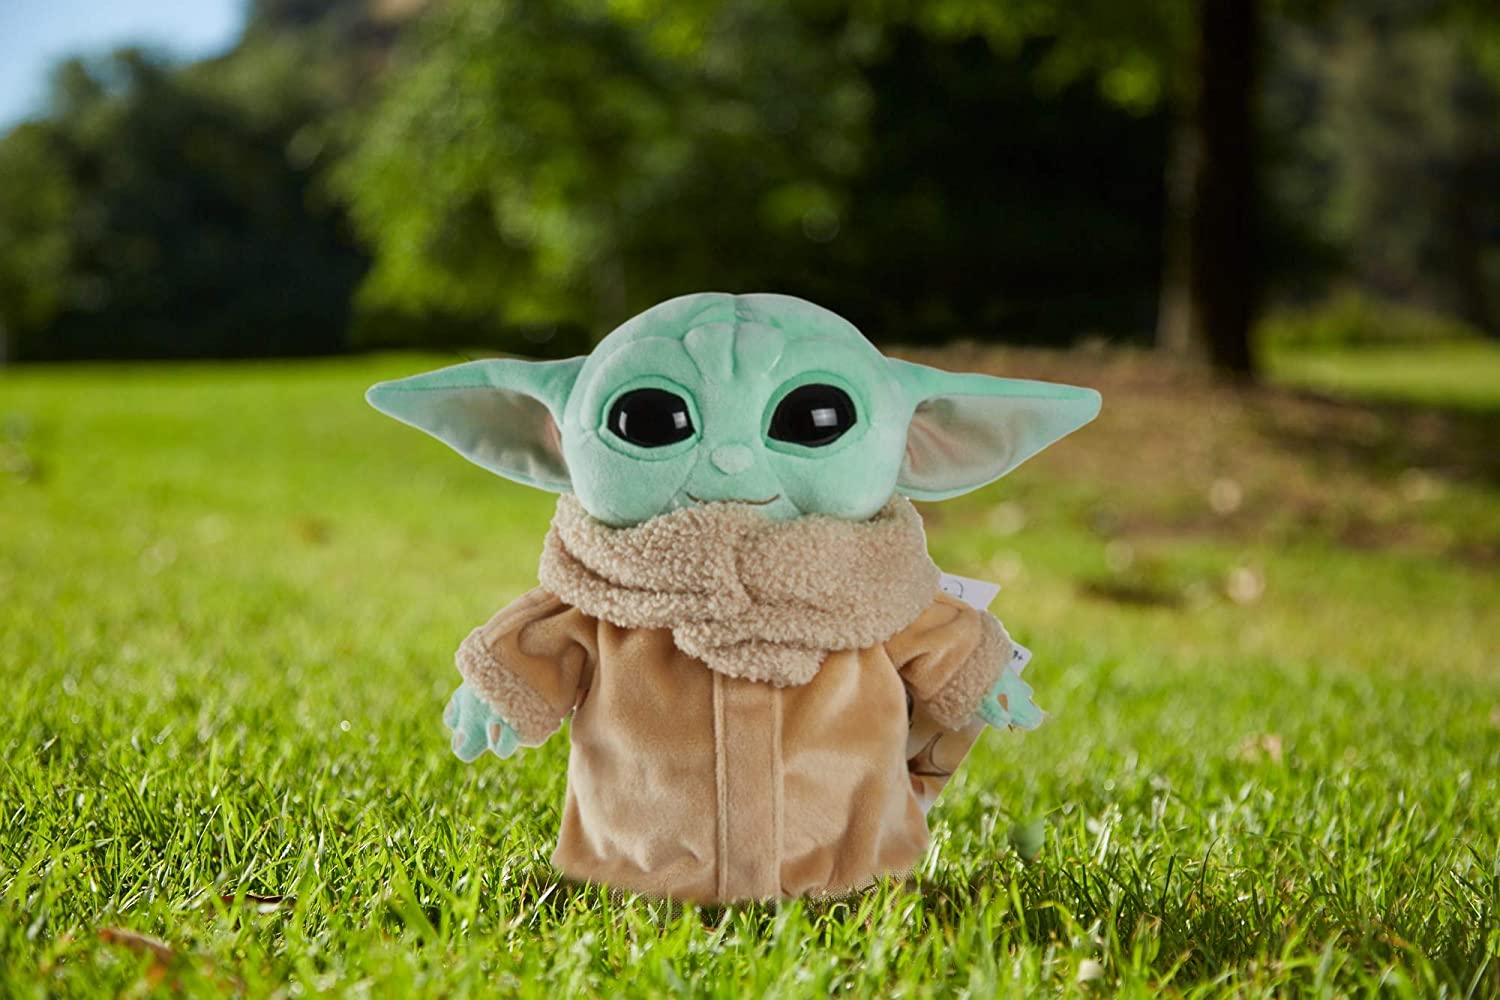 Peluche Star Wars The Child Baby Yoda The Mandalorian